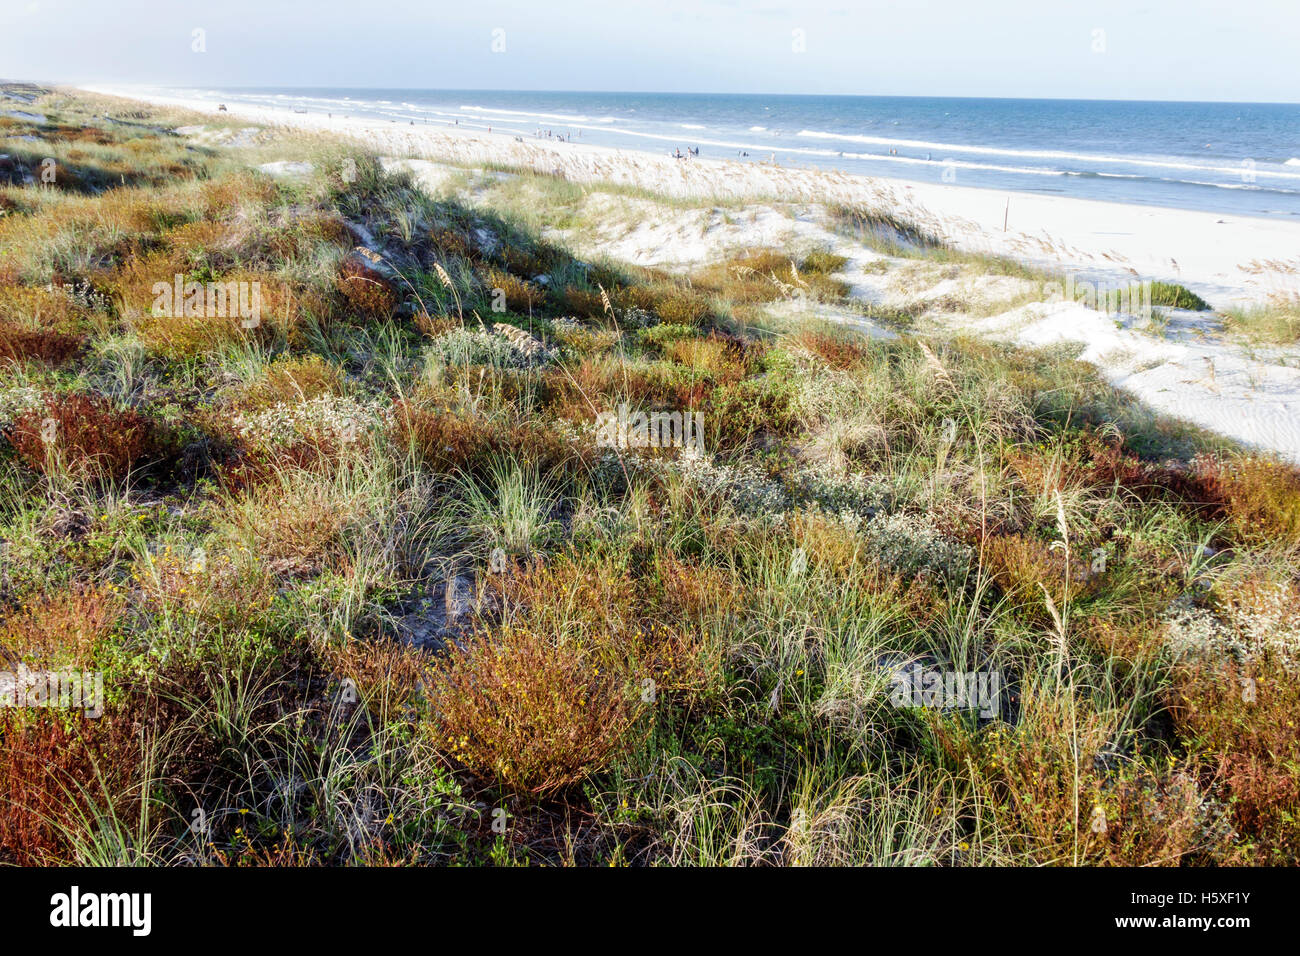 St. Saint Augustine Florida,Beacher's Lodge Ocean waterfront Suites,boardwalk,beach beaches,Atlantic Ocean water,natural dunes,visitors travel traveli Stock Photo